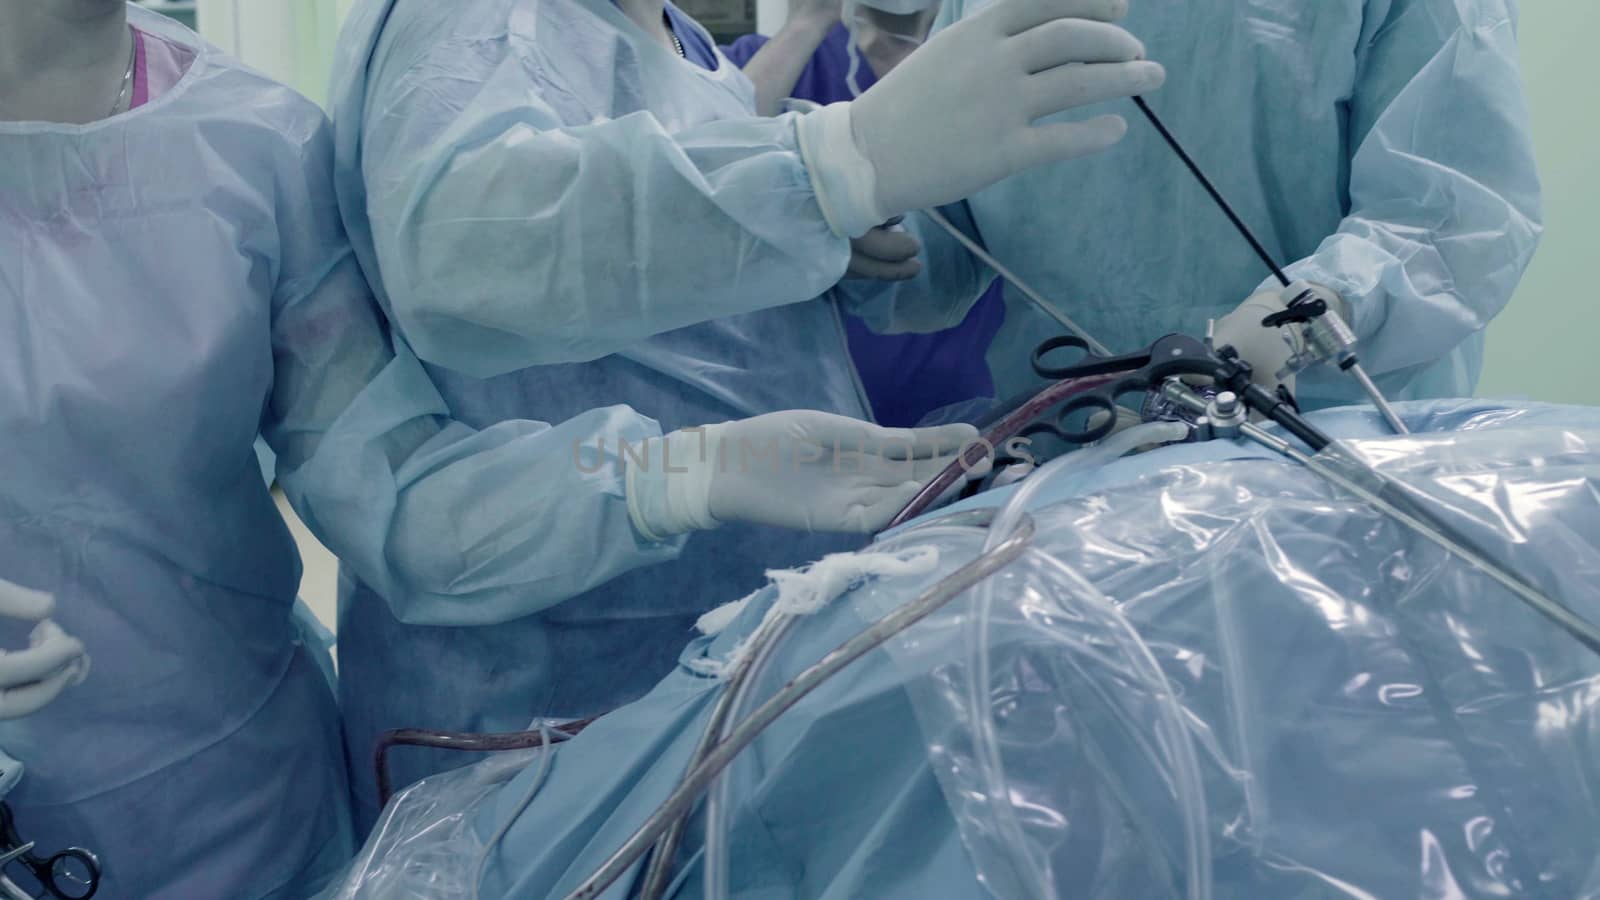 Laparoscopic surgery of the abdomen by Chudakov